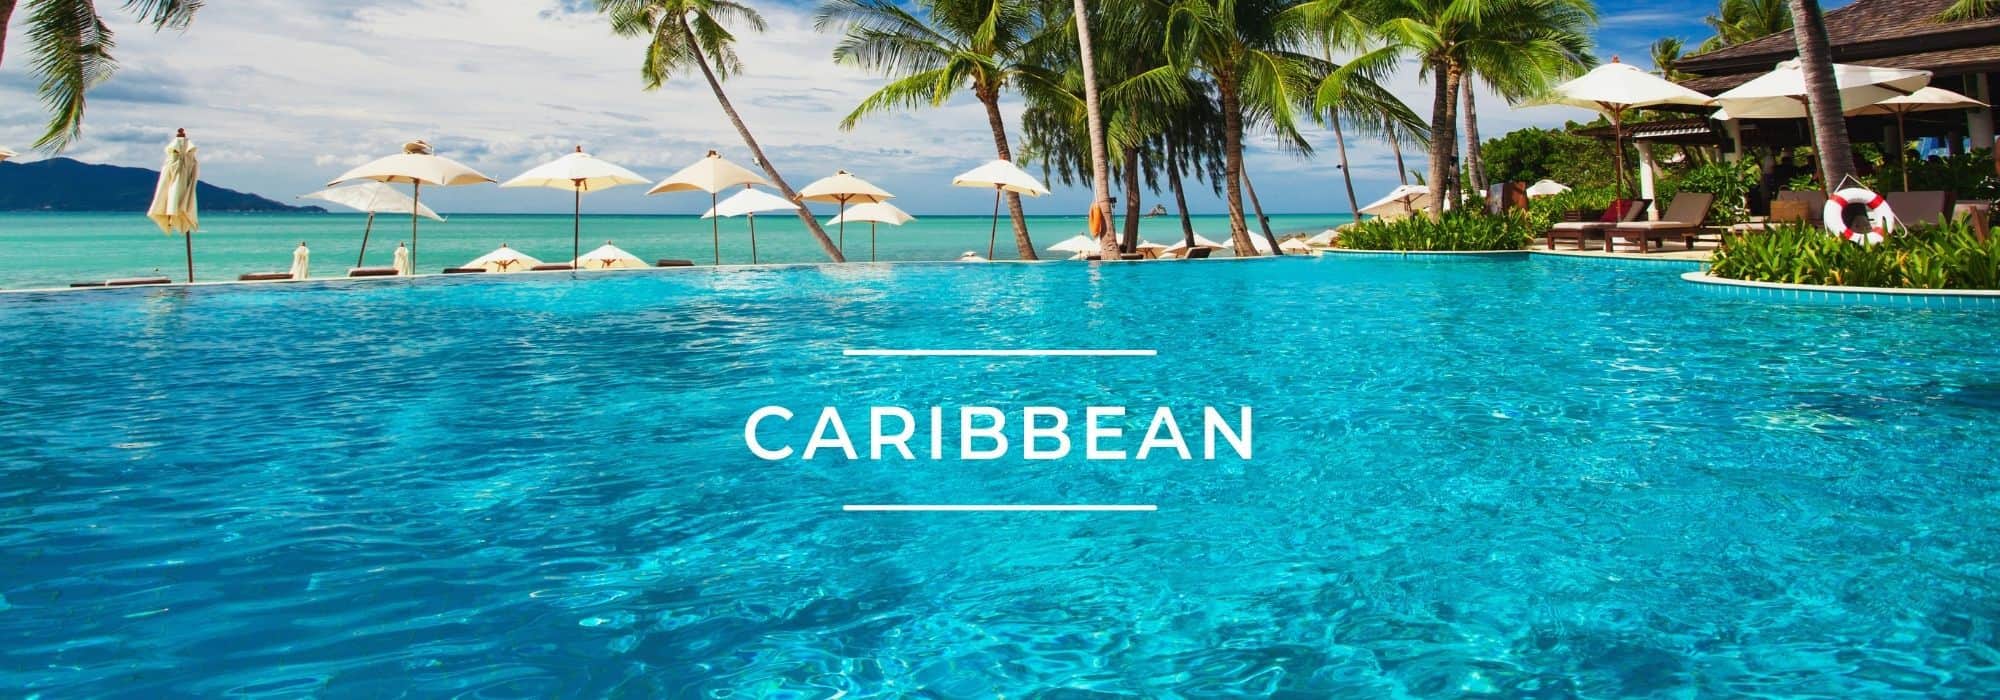 Caribbean Travel Guide